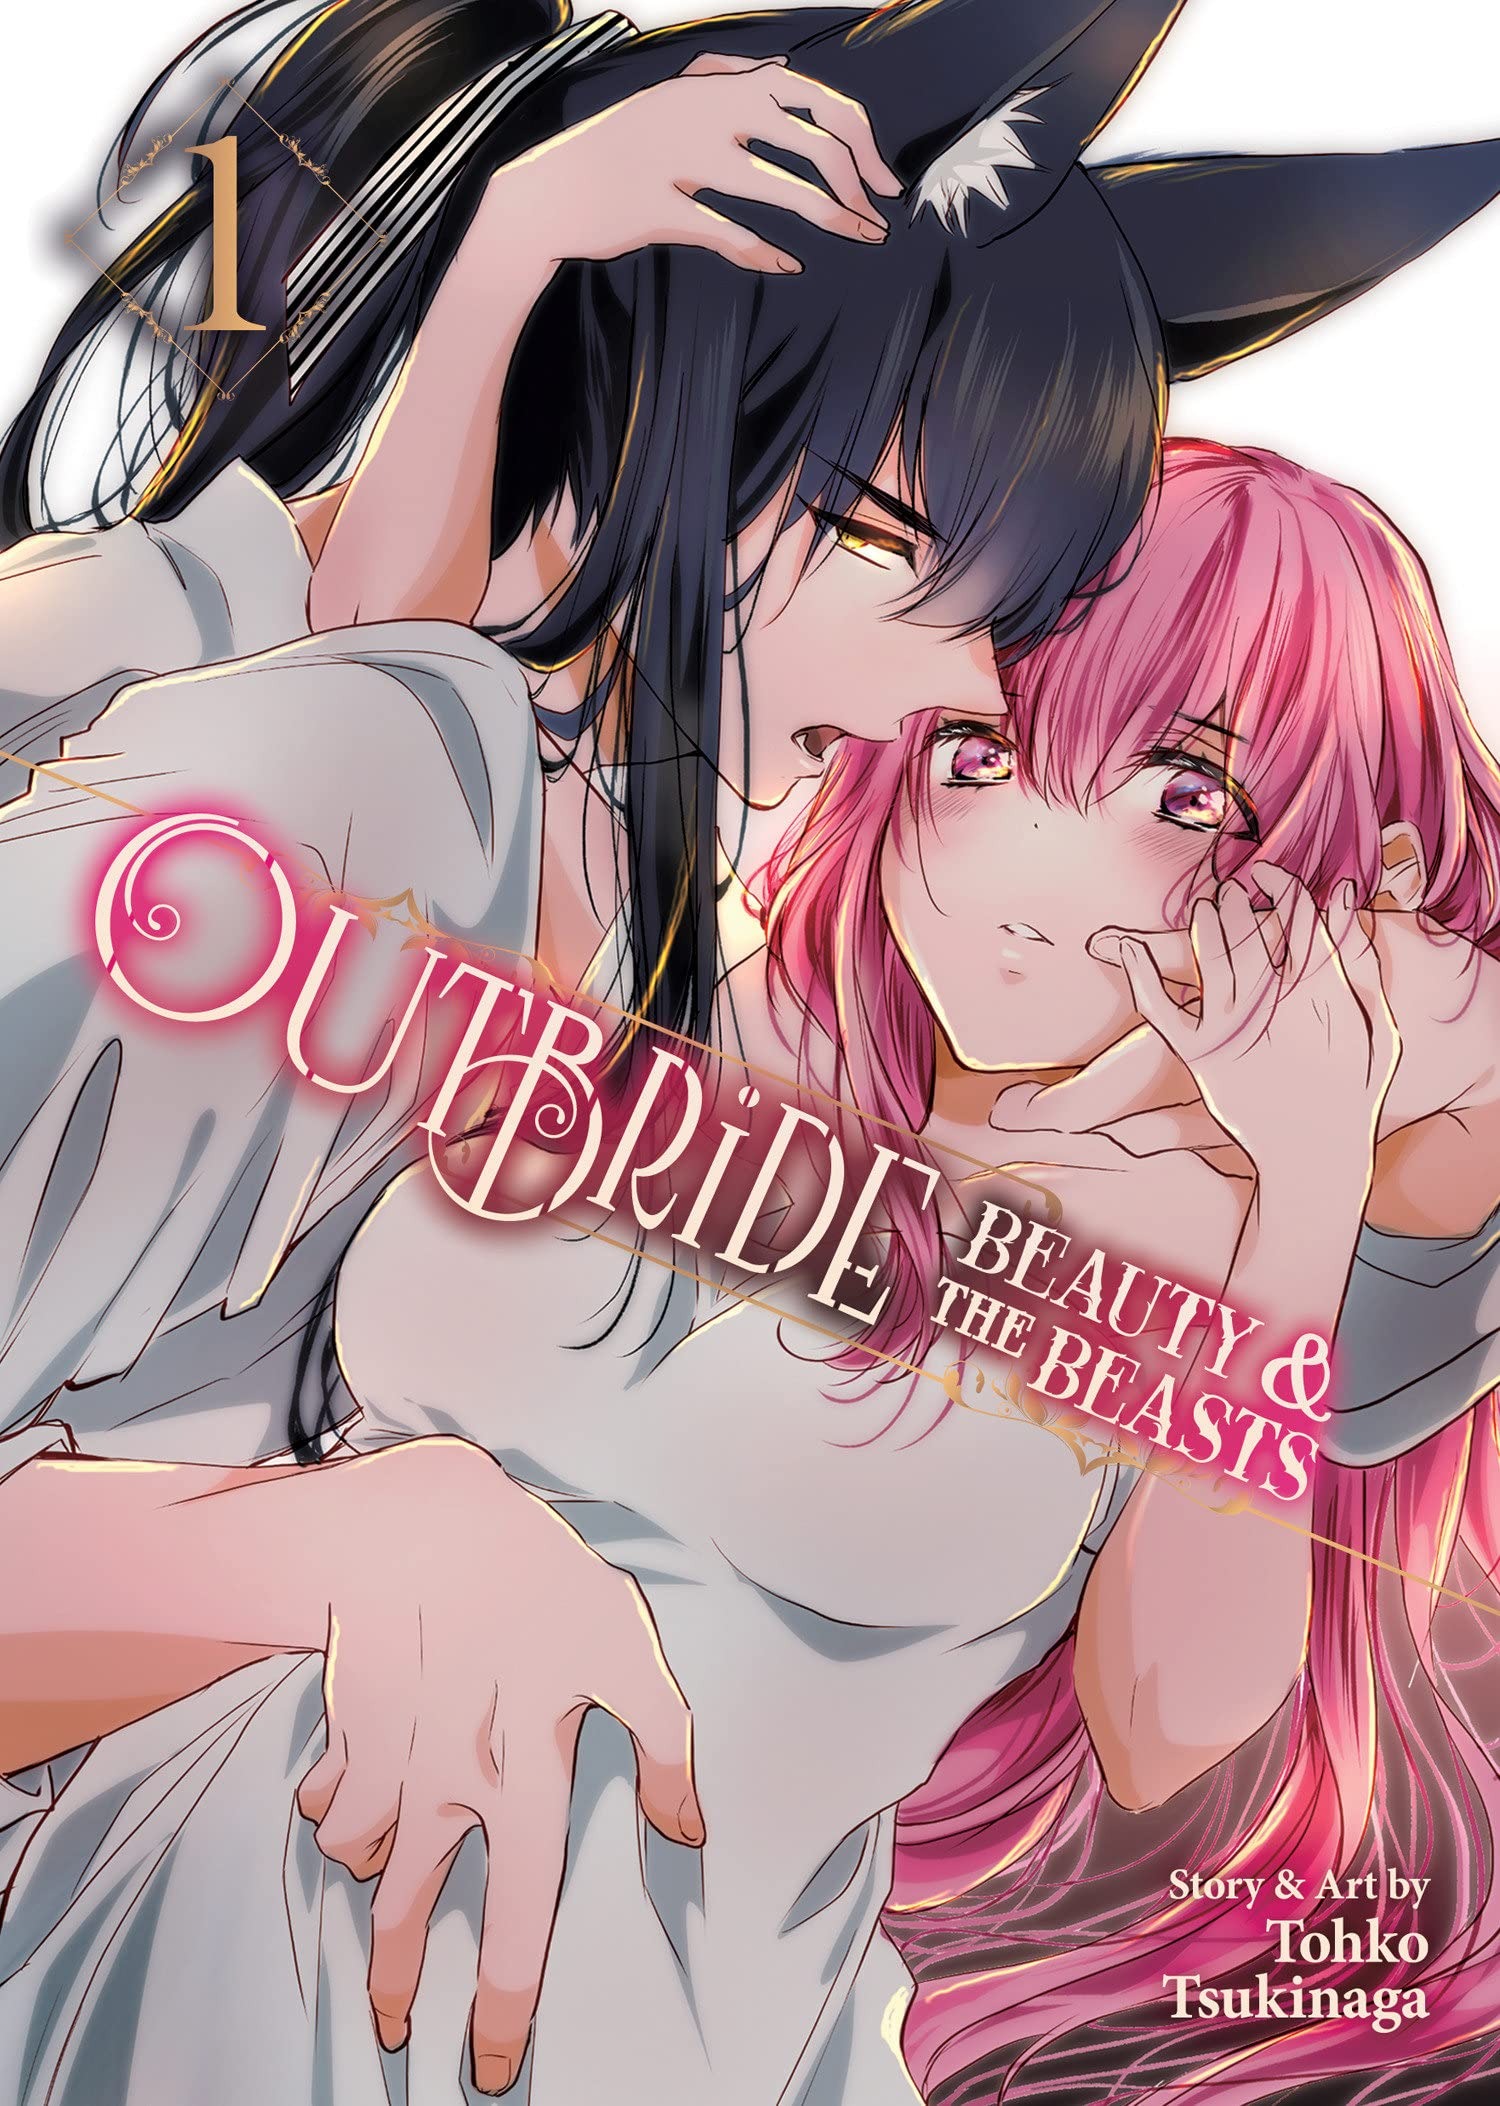 Outbride Beauty & Beasts Manga Volume 1